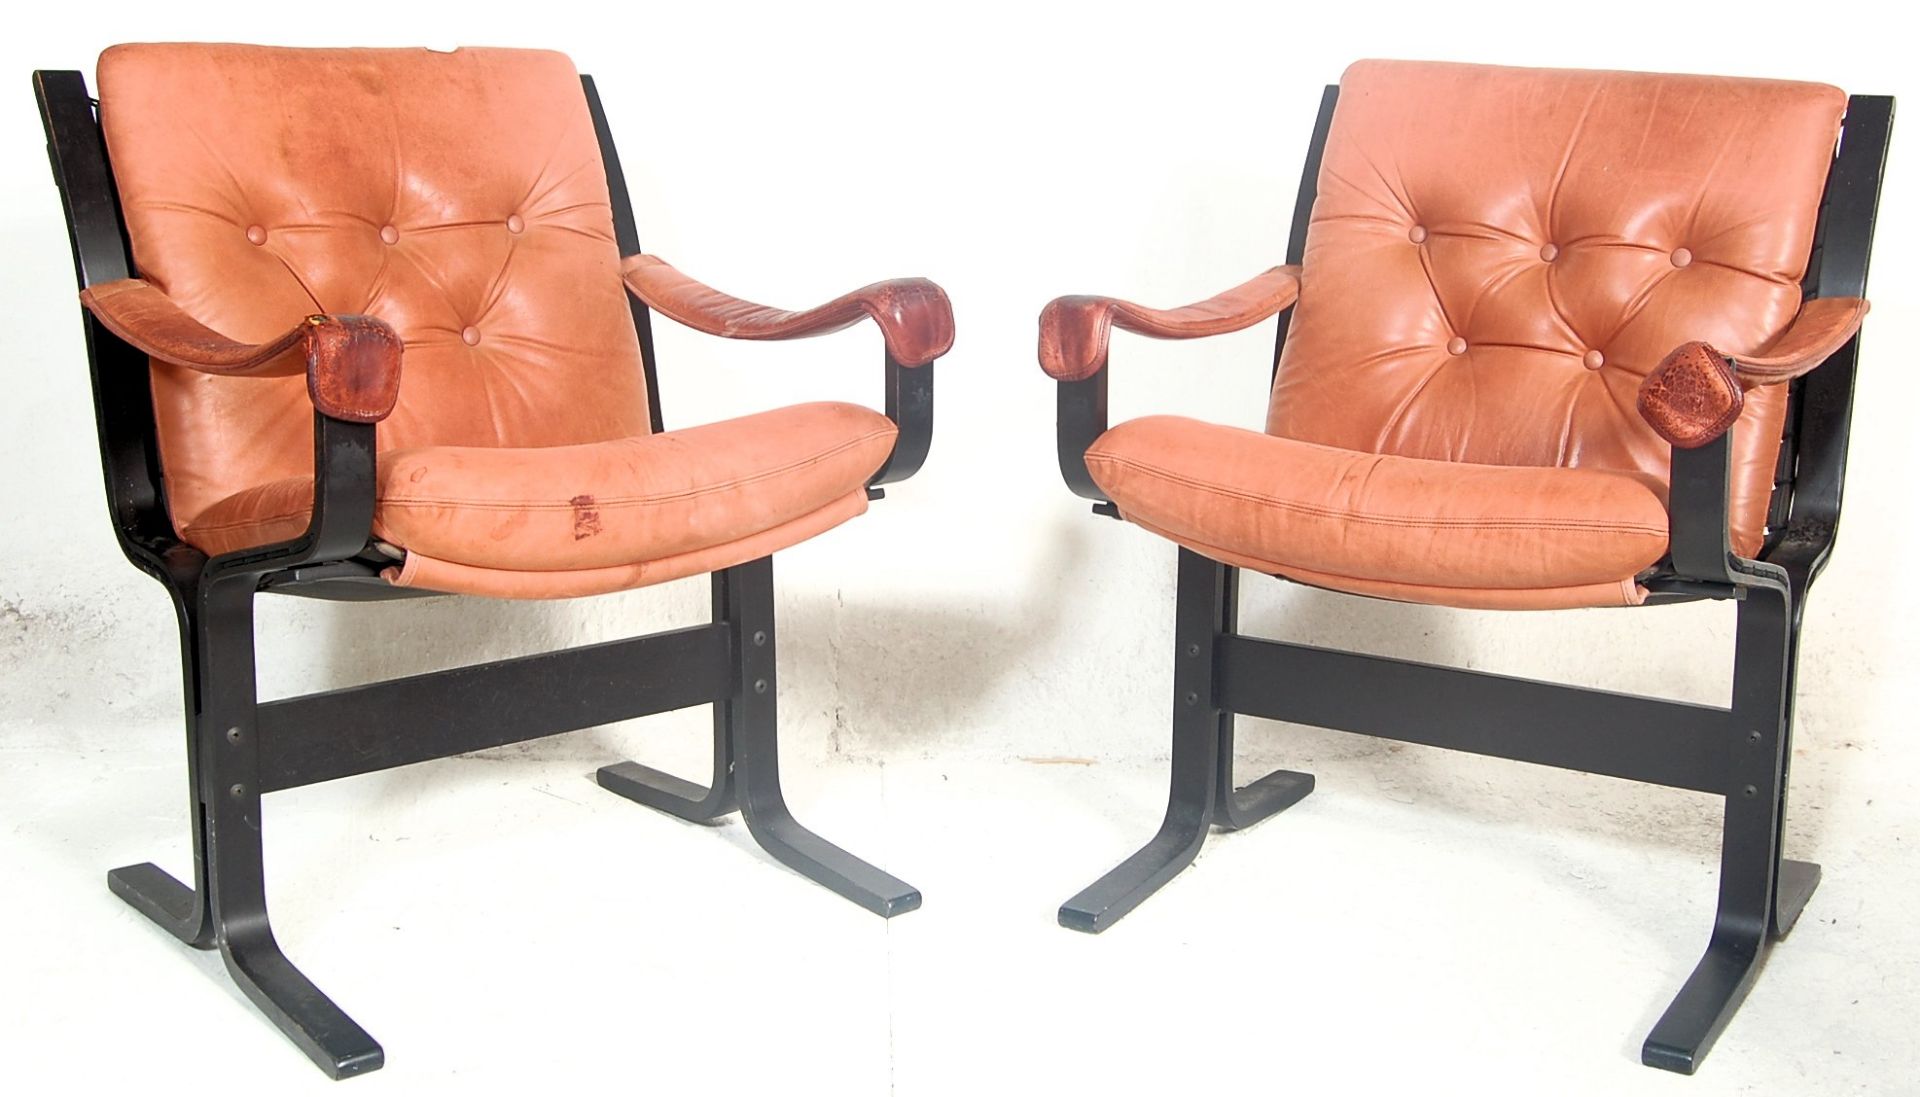 An amazing pair of retro vintage 20th century Danish inspired armchairs having black ebonies